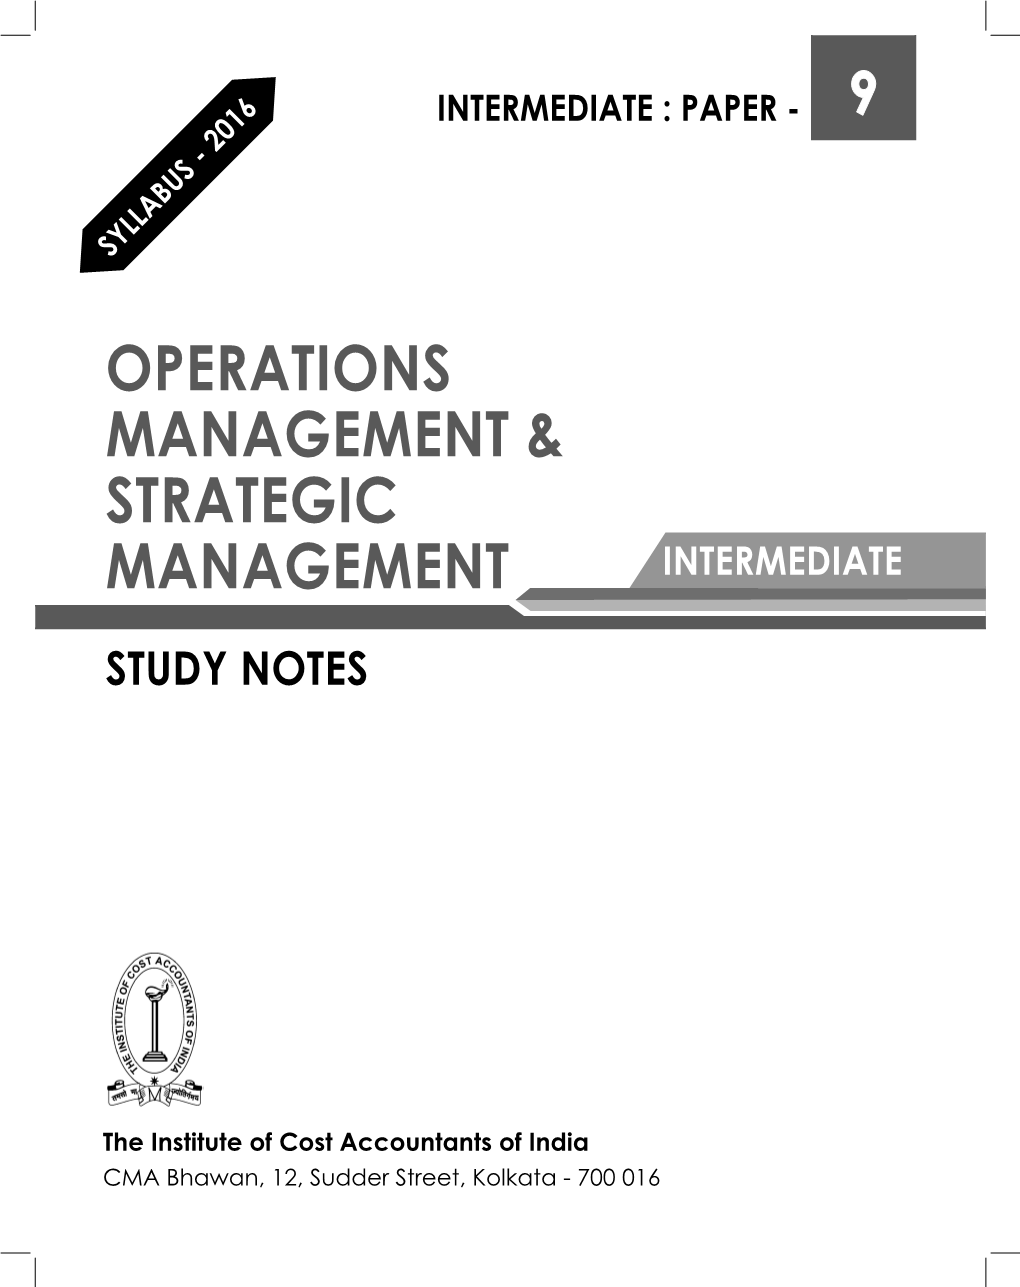 Paper 9: Operations Management & Strategic Management